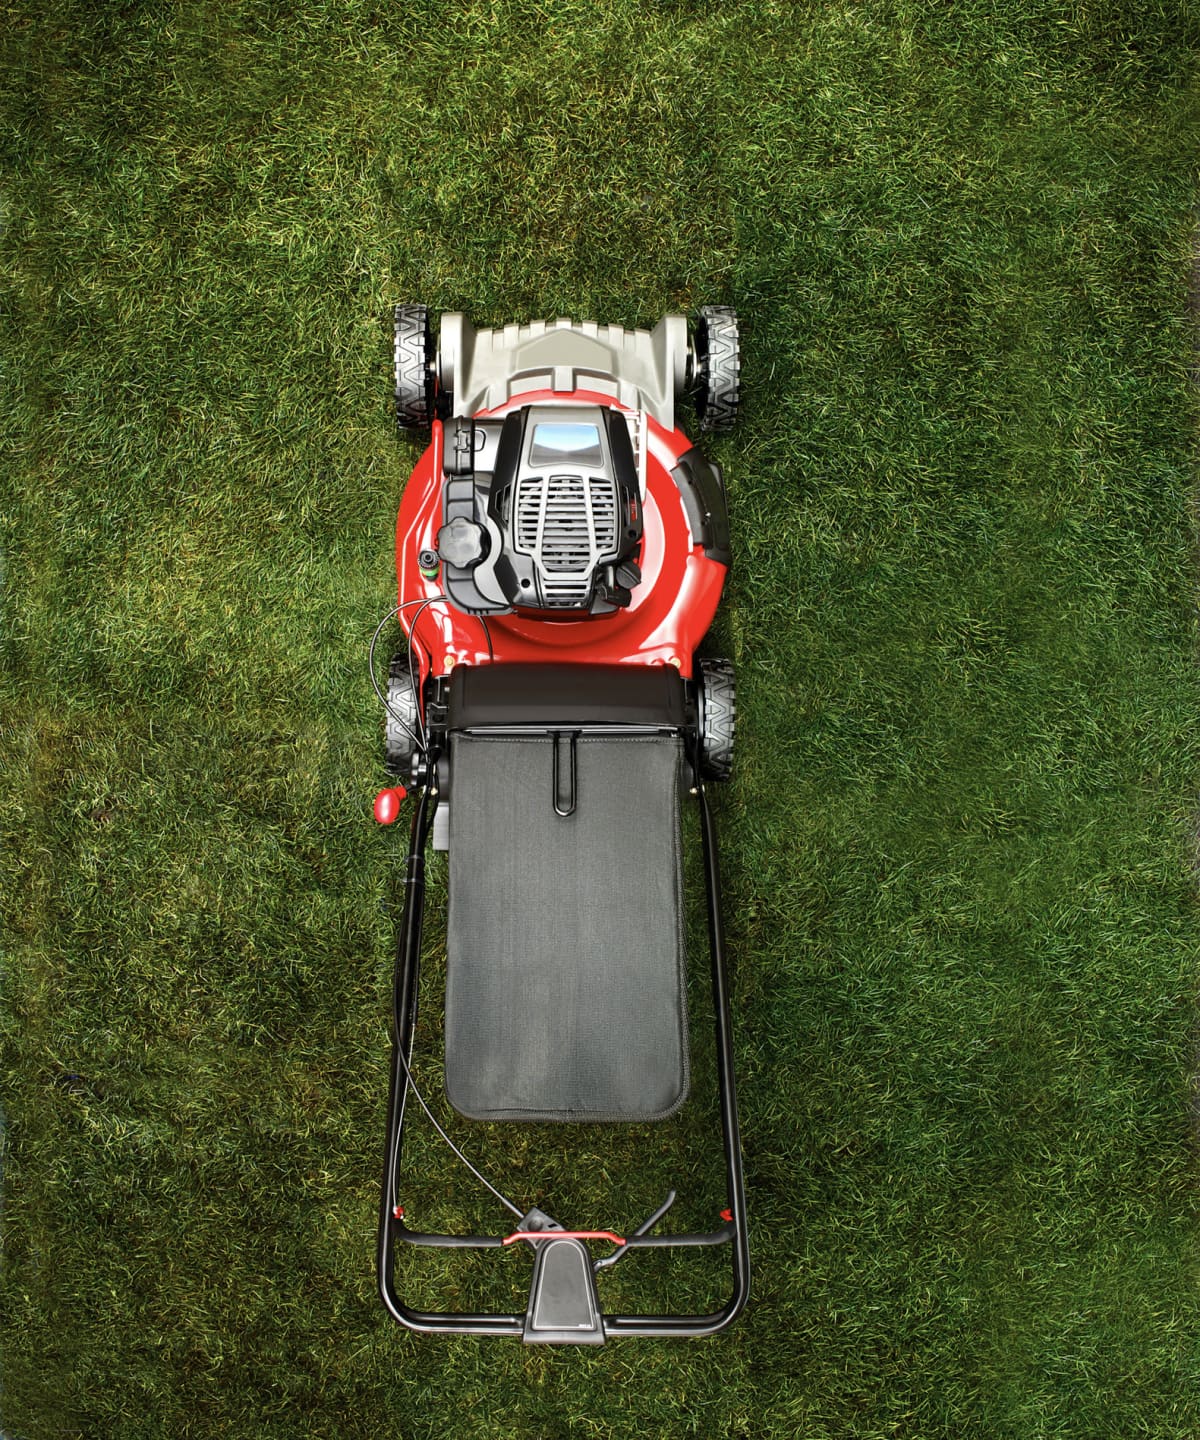 A lawnmower mowing a lawn. 